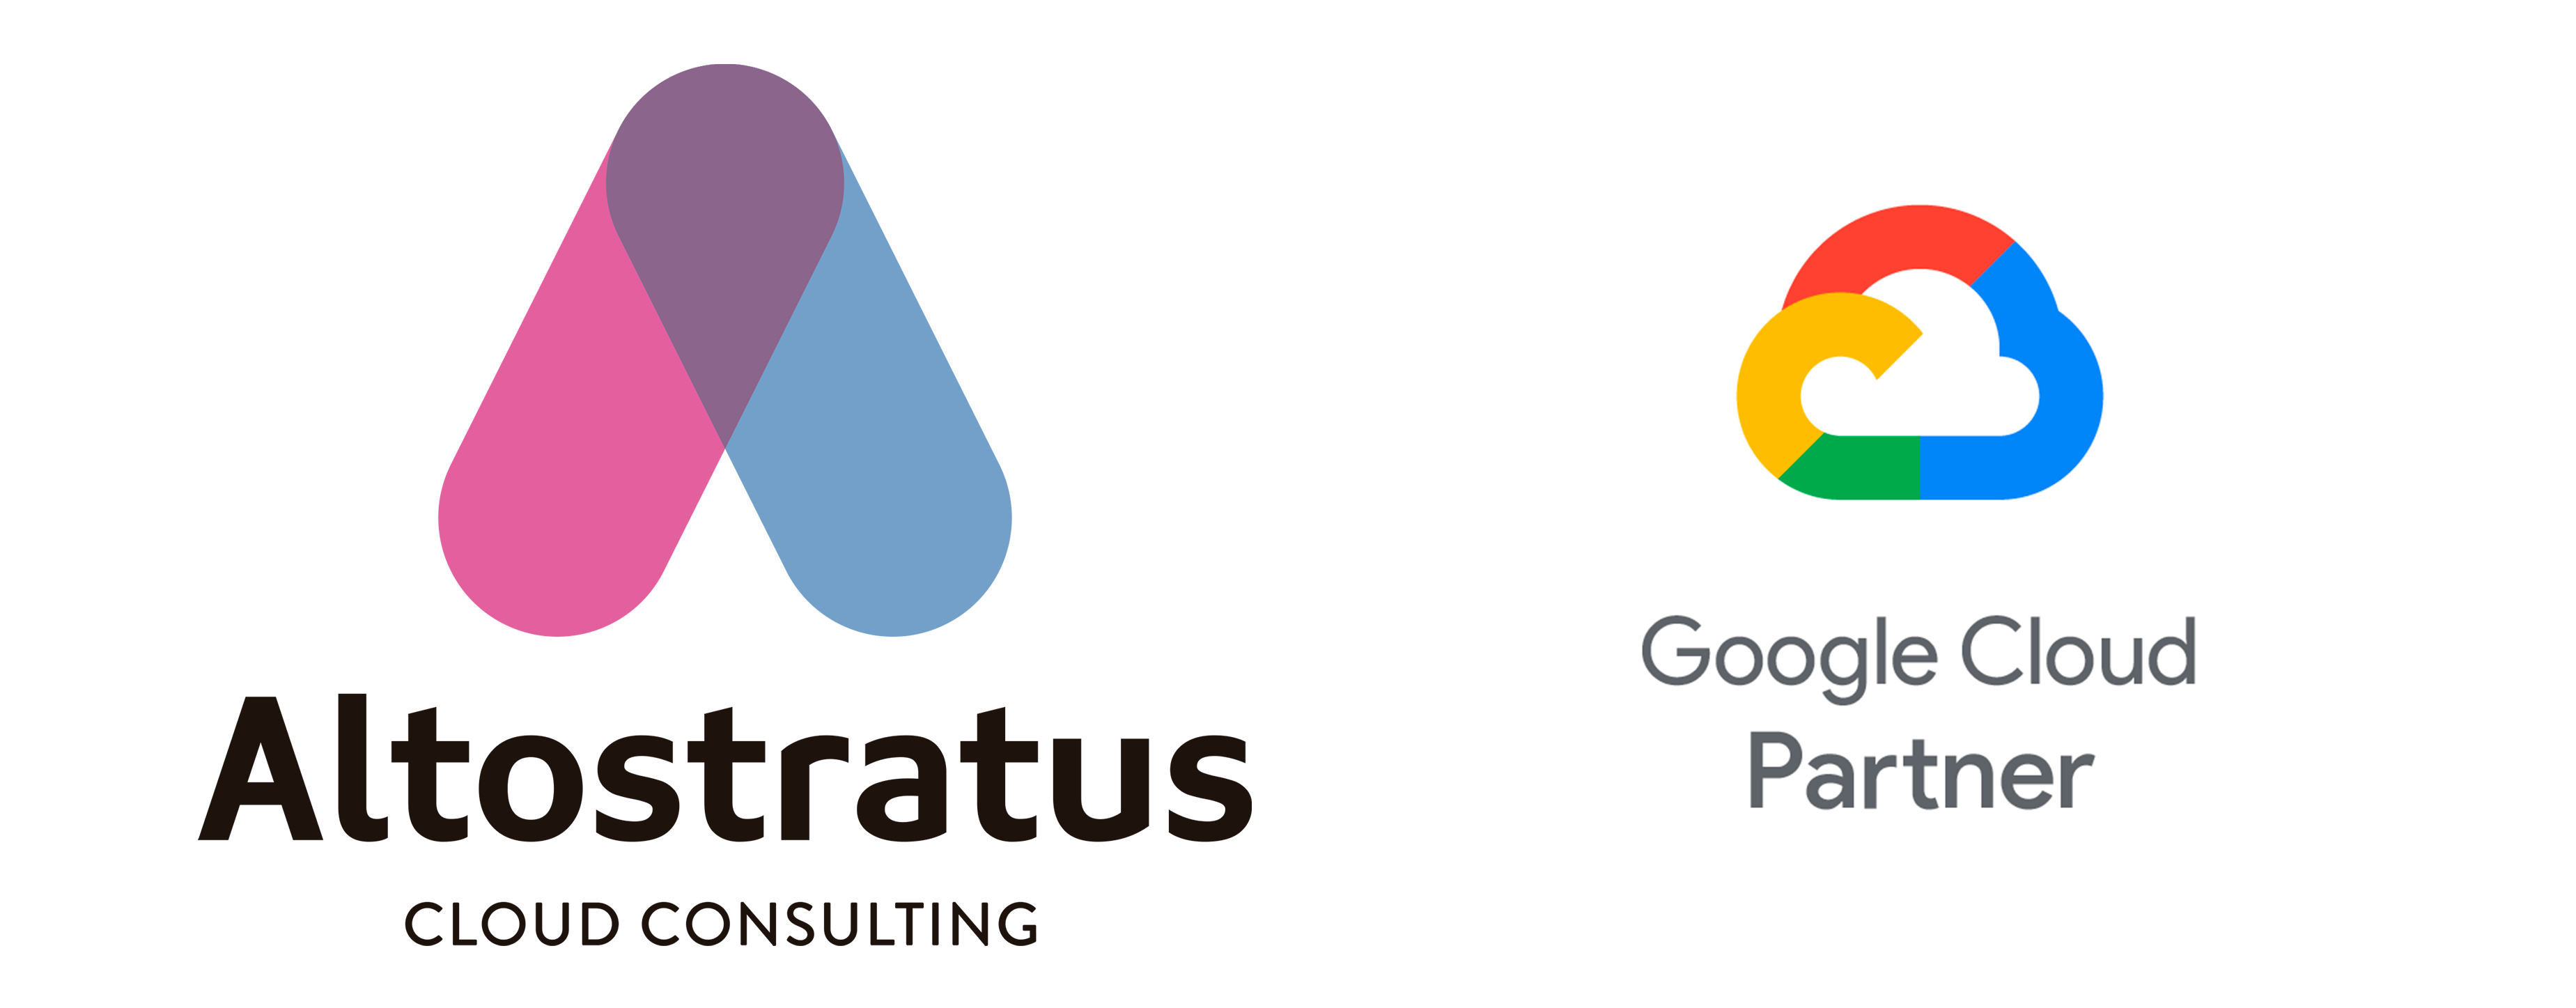 altostratus-logo-partner